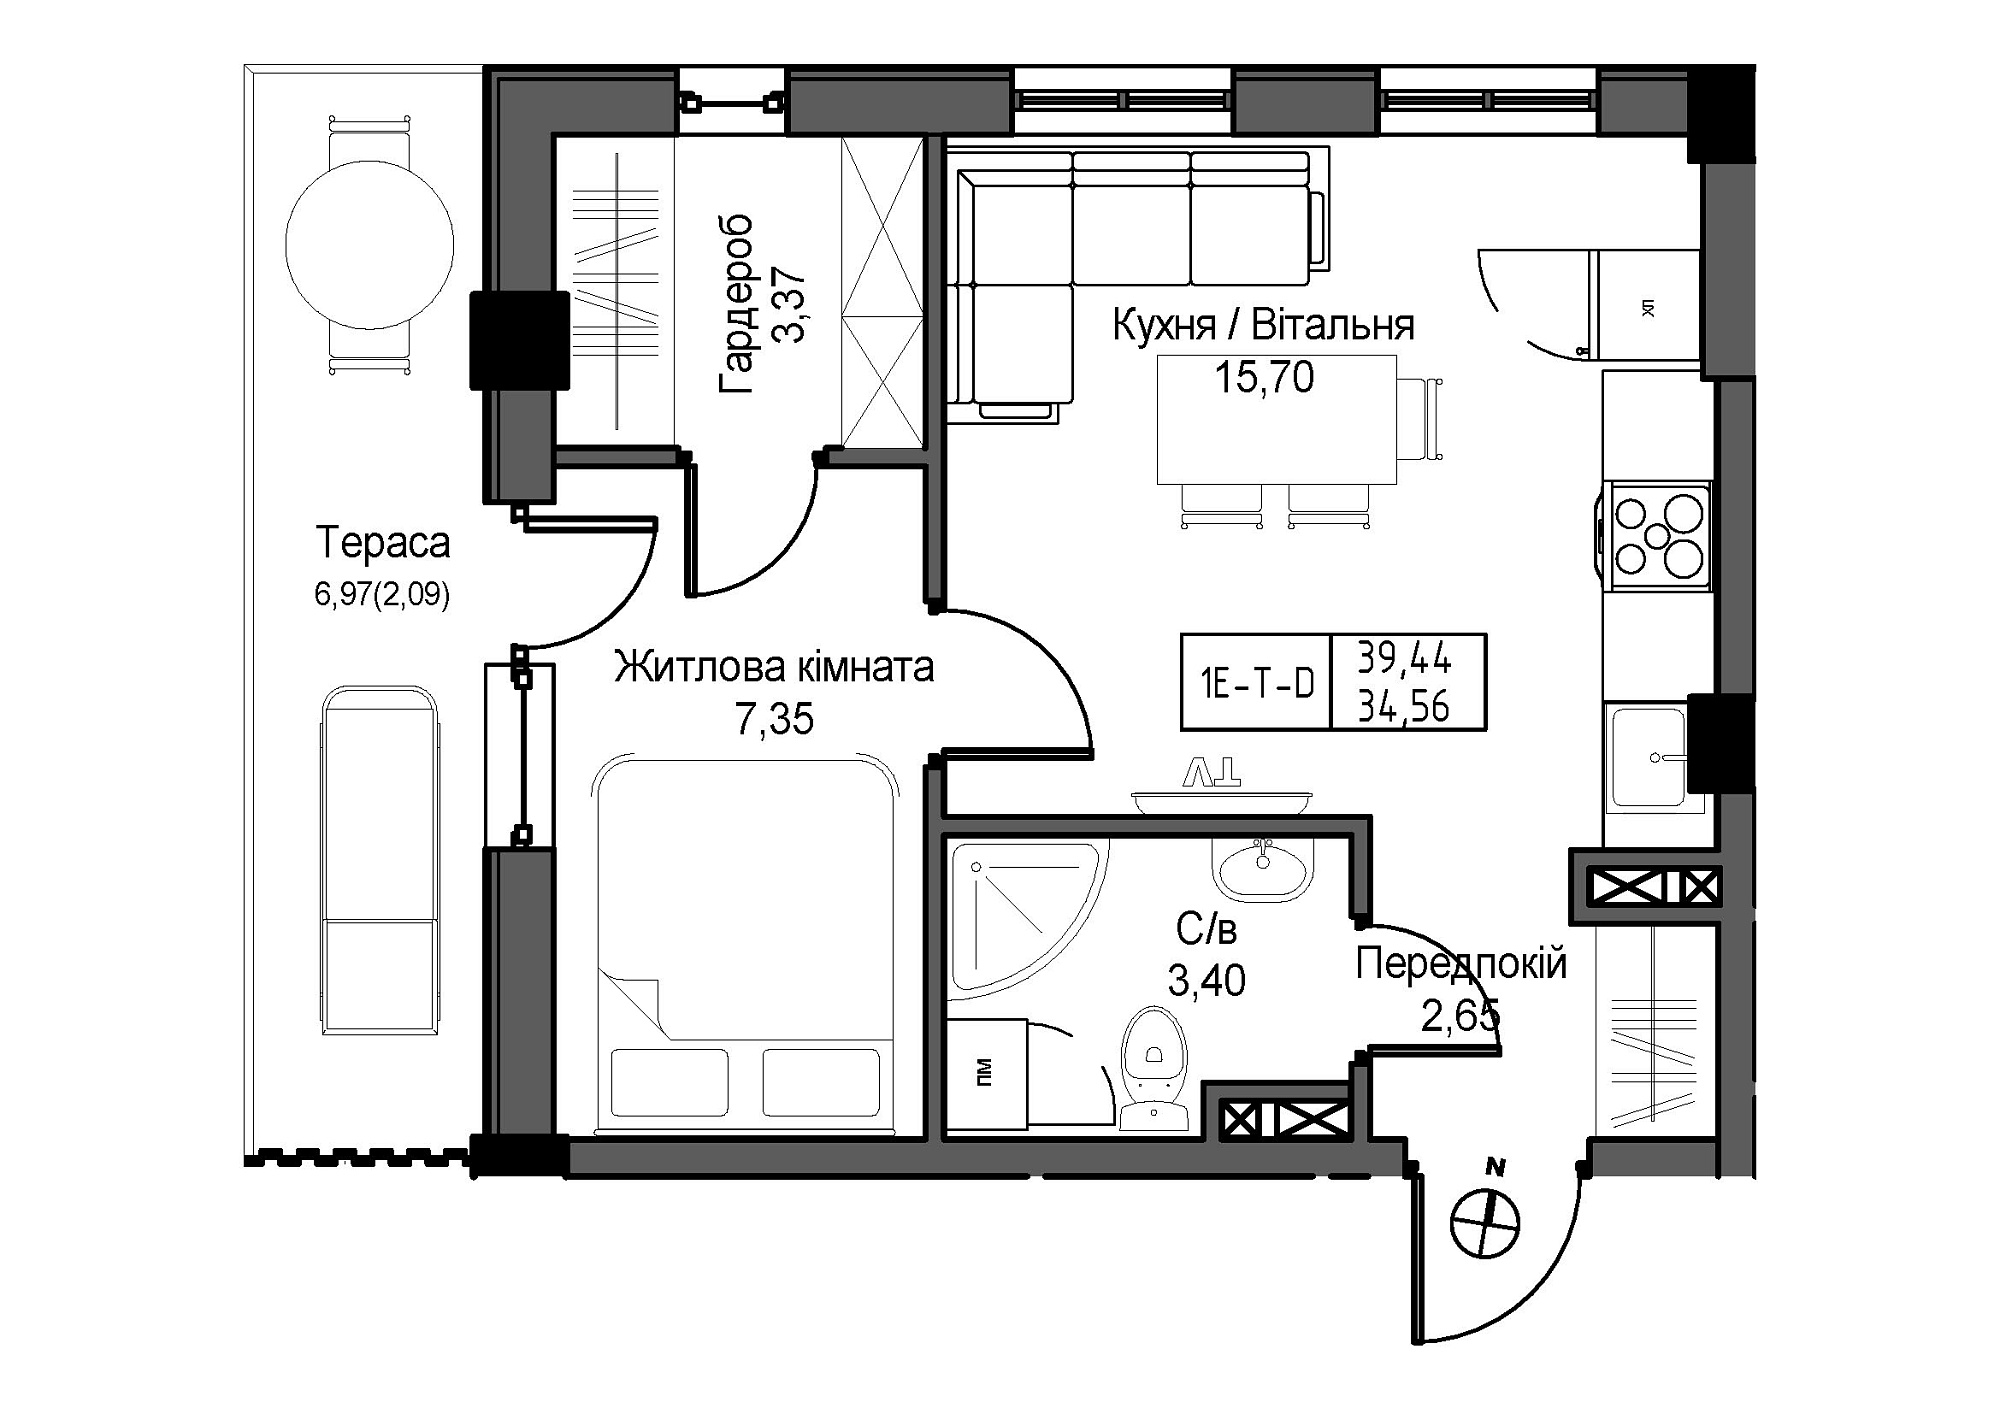 Планування 1-к квартира площею 34.56м2, UM-007-12/0002.